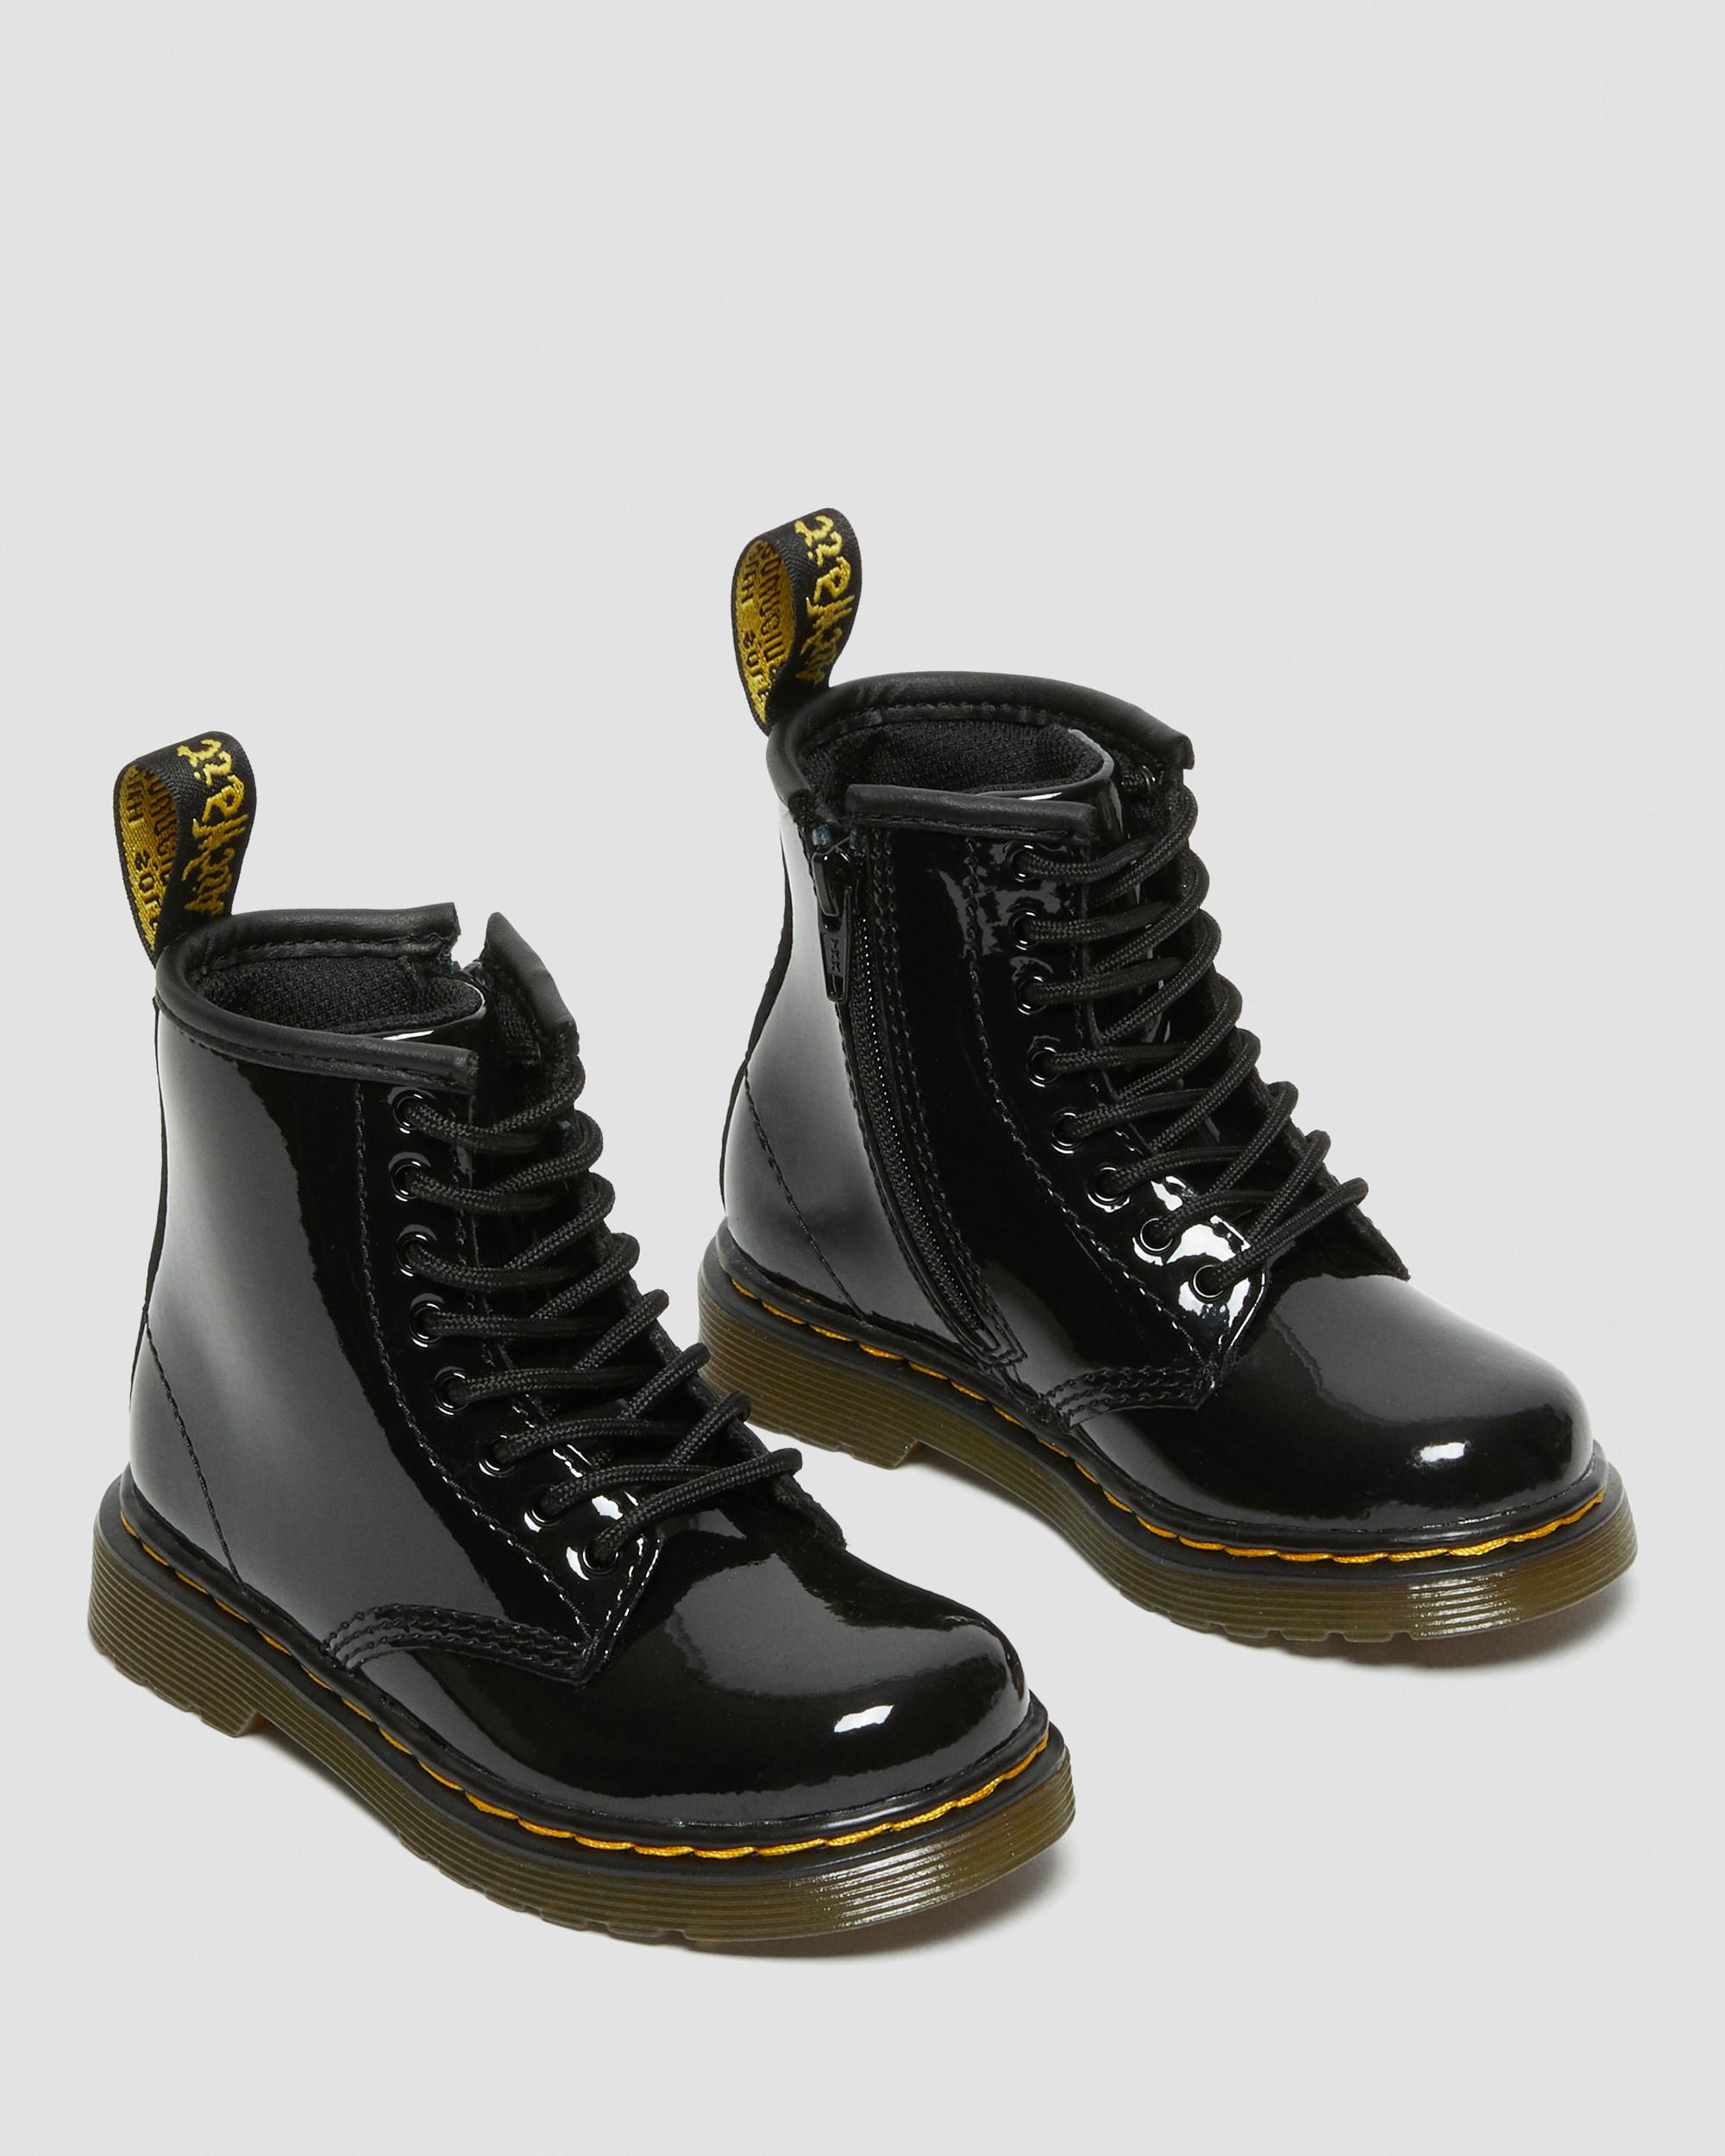 Dr. Martens 1460 Patent Leather Boots Pre-School – DTLR